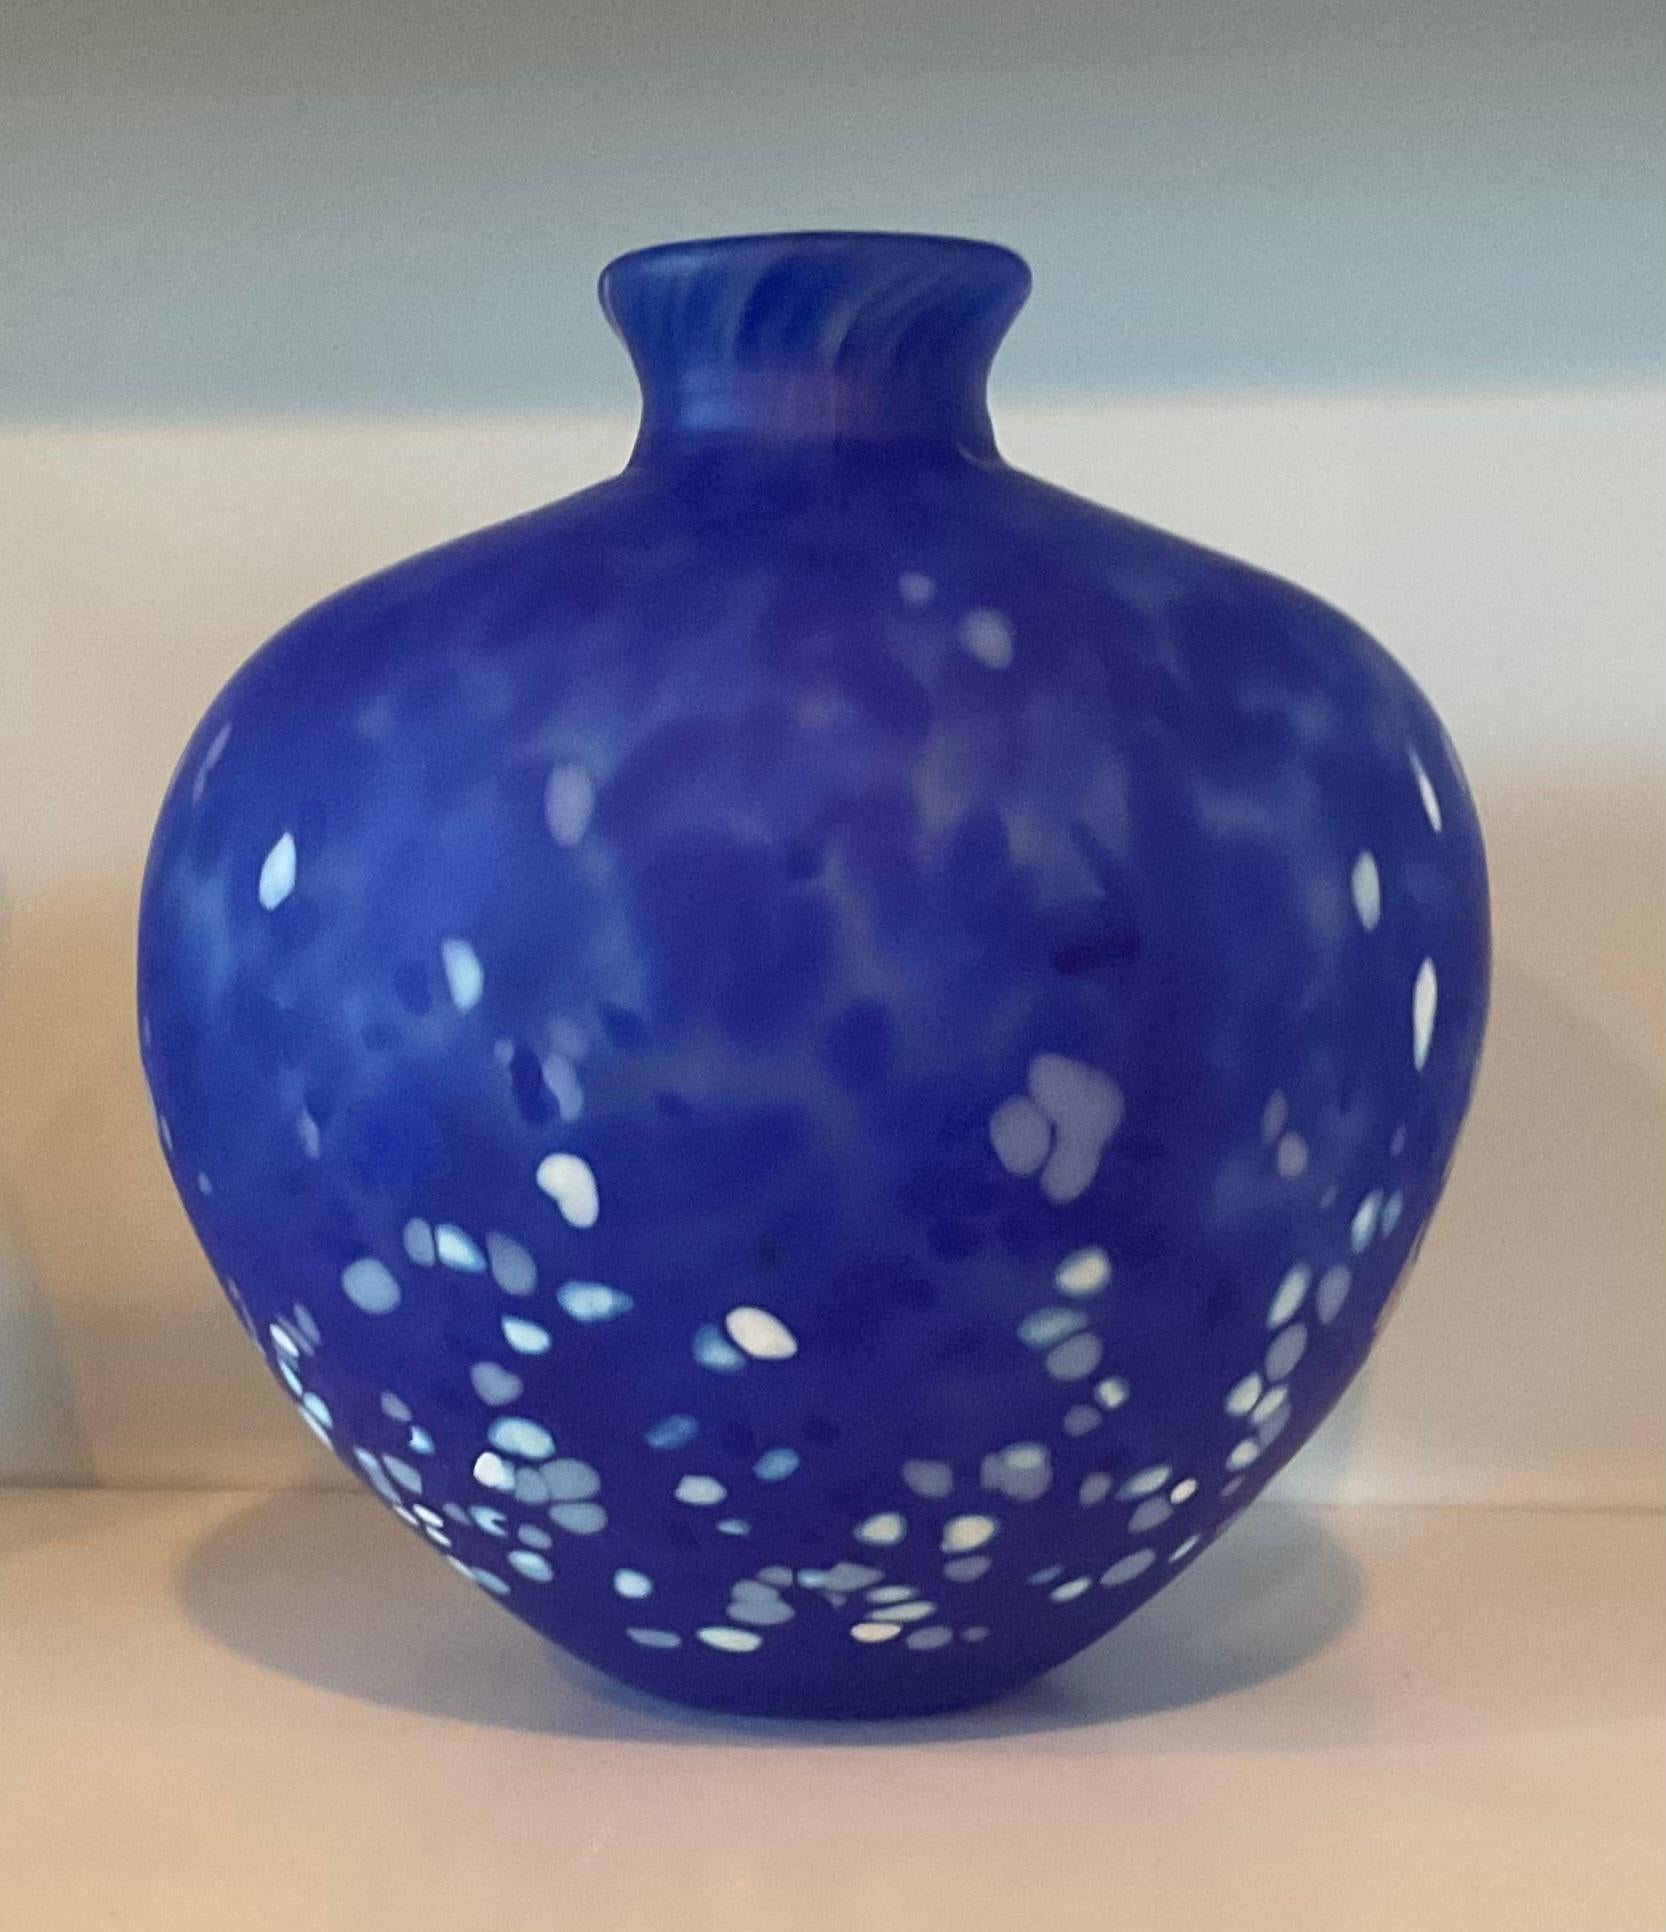 Kyohei Fujita Japanese Studio Glass Vase Signed by the Artist Vibrant Blue 1